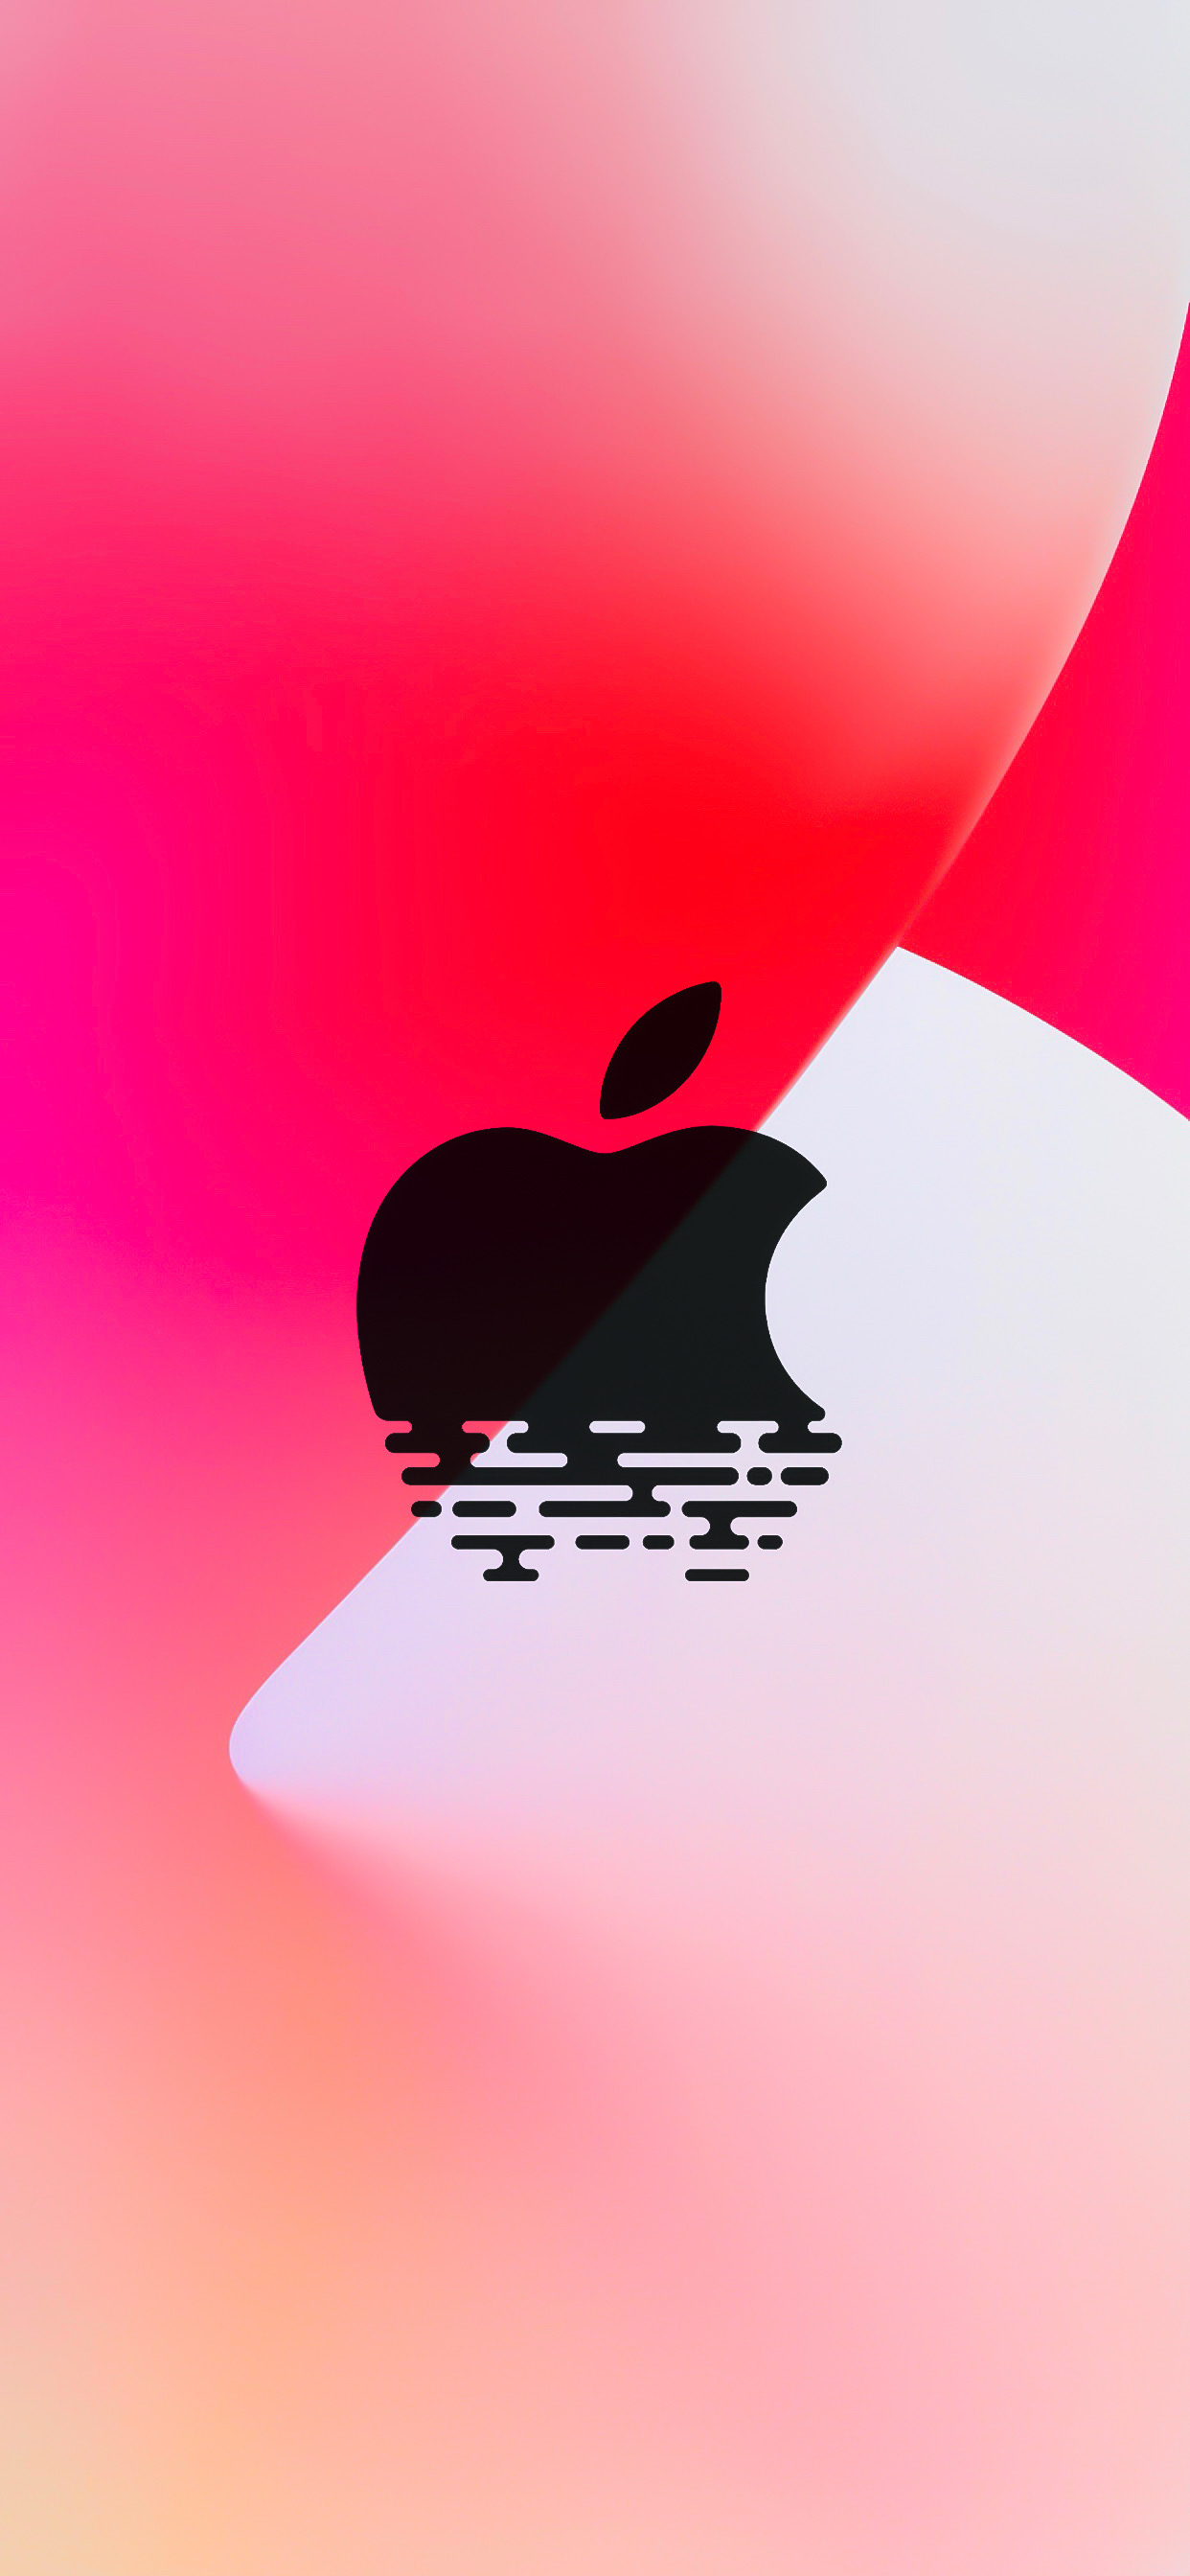 Apple_Marina_Bay_Sands_Wallpaper-iPhone AR72014 idownloadblog Red logo